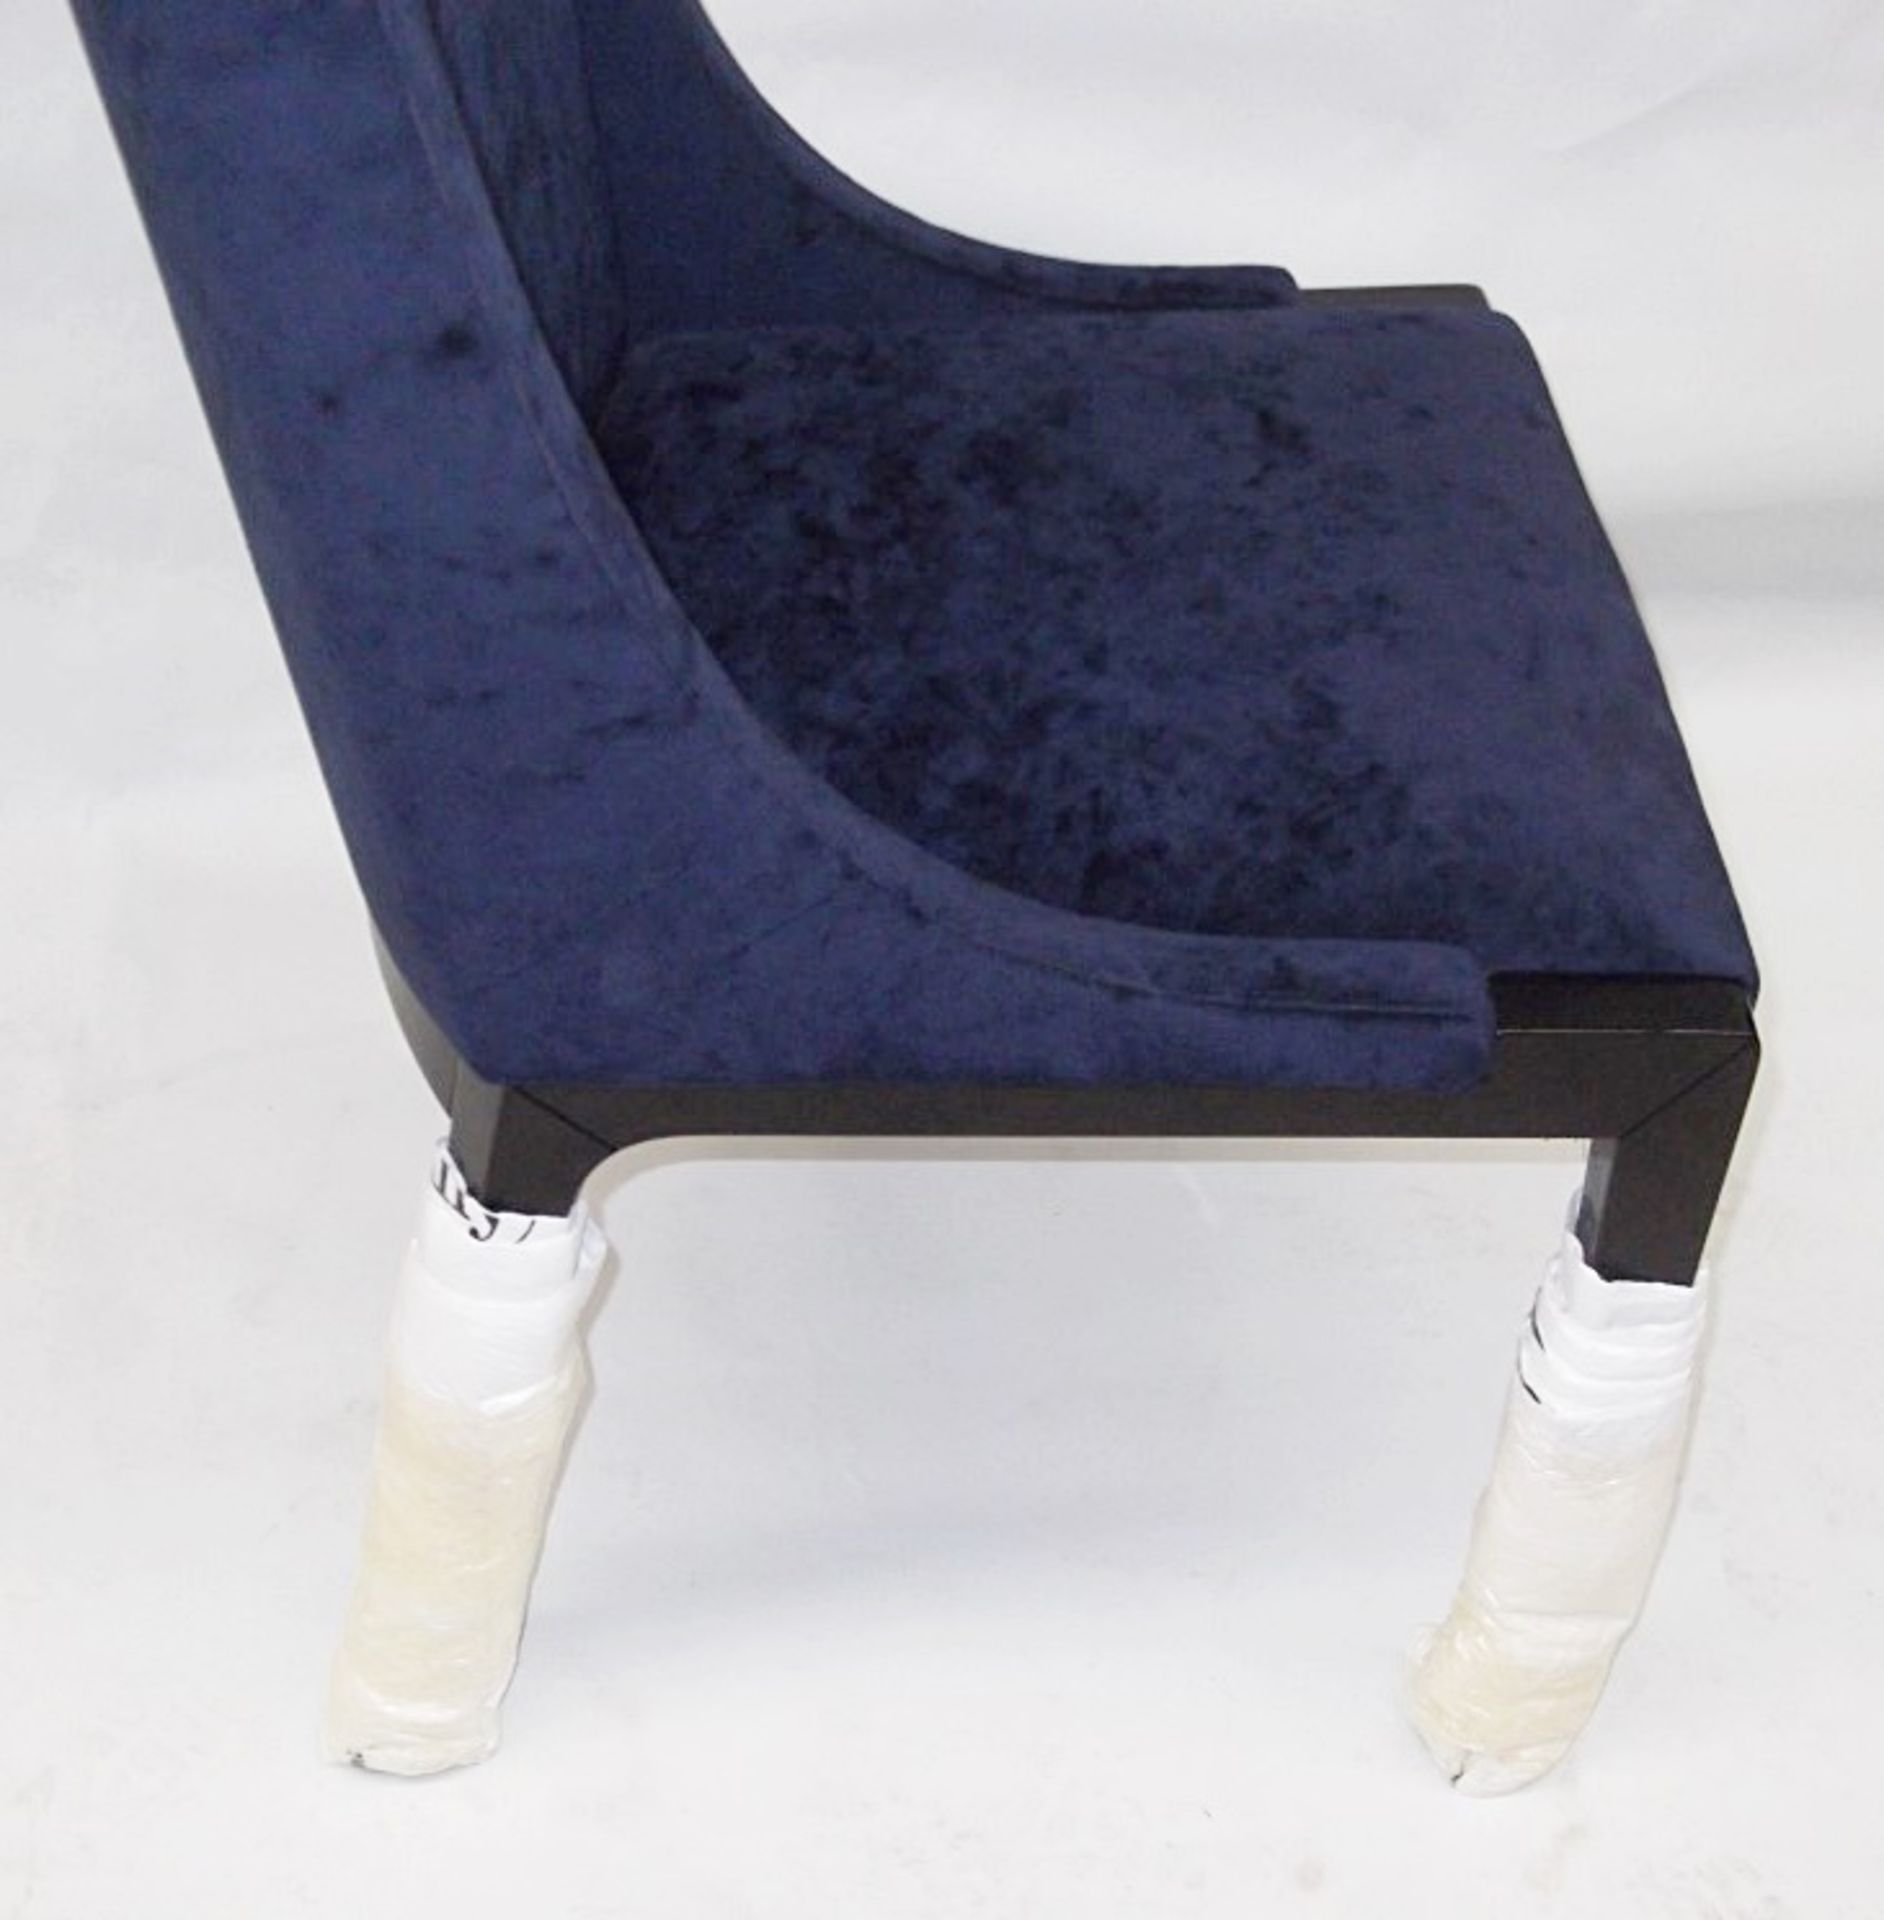 1 x KESTERPORT LTD 9235s Sempre High Back Side Chair - 137 x 53 x 53cm - Ref: 4416848B - CL087 - - Image 3 of 9